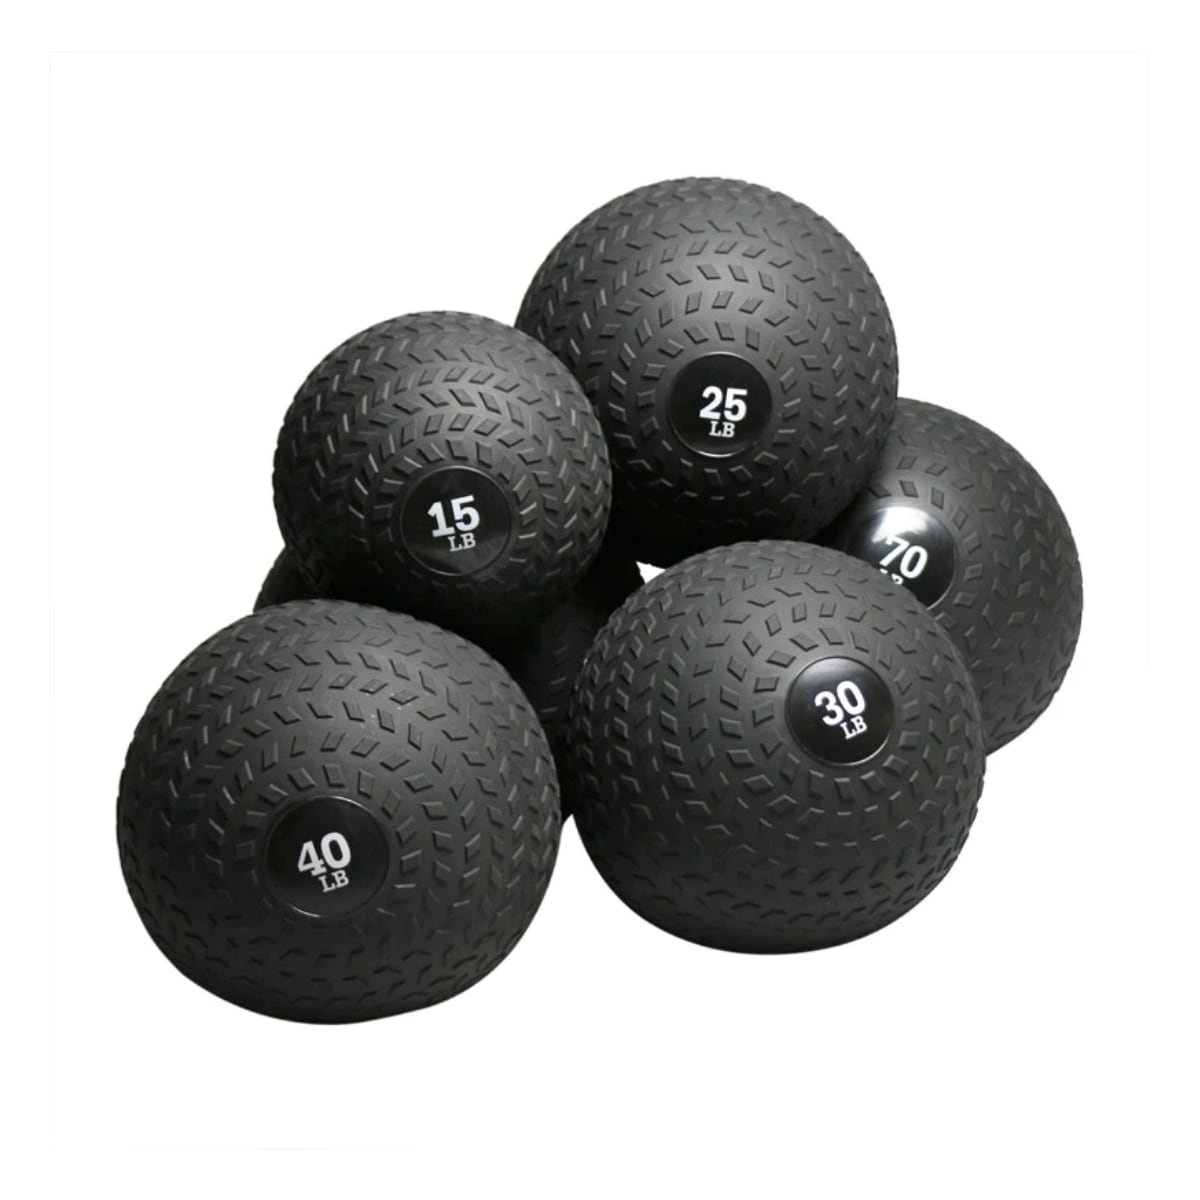 Brug American barbell AmericanBarbell Slam ball 15 lb til en forbedret oplevelse